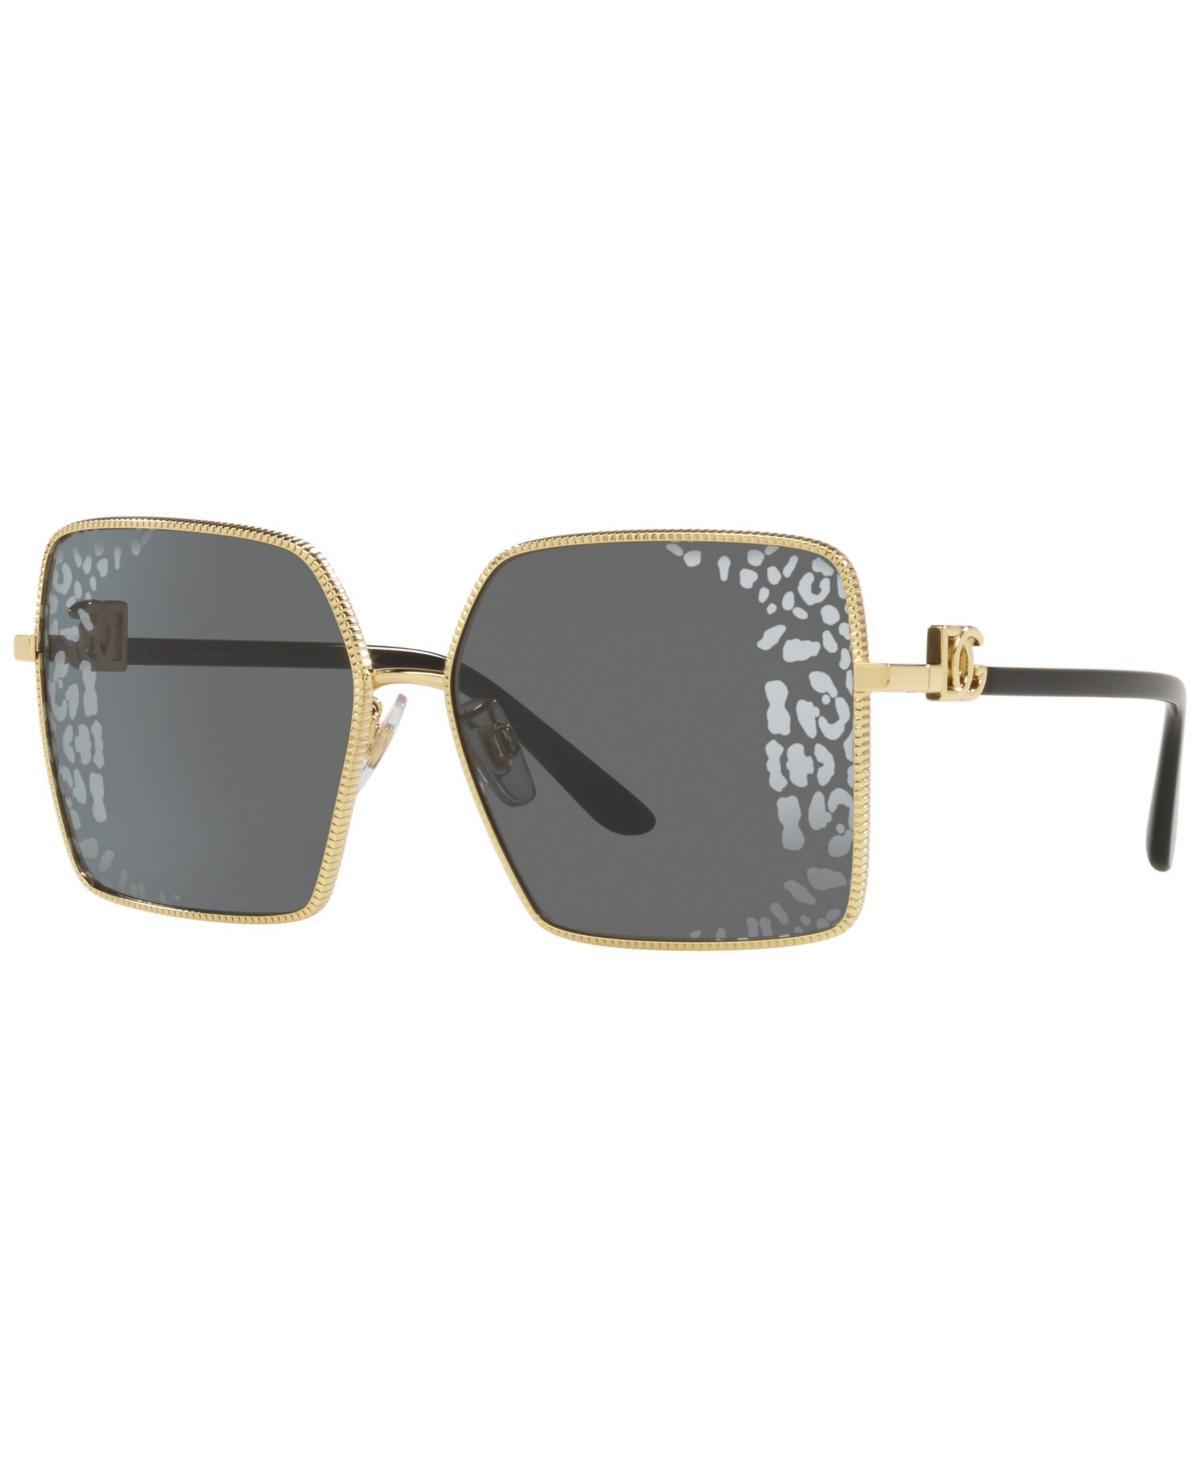 Dolce & Gabbana 60mm Square Sunglasses Product Image